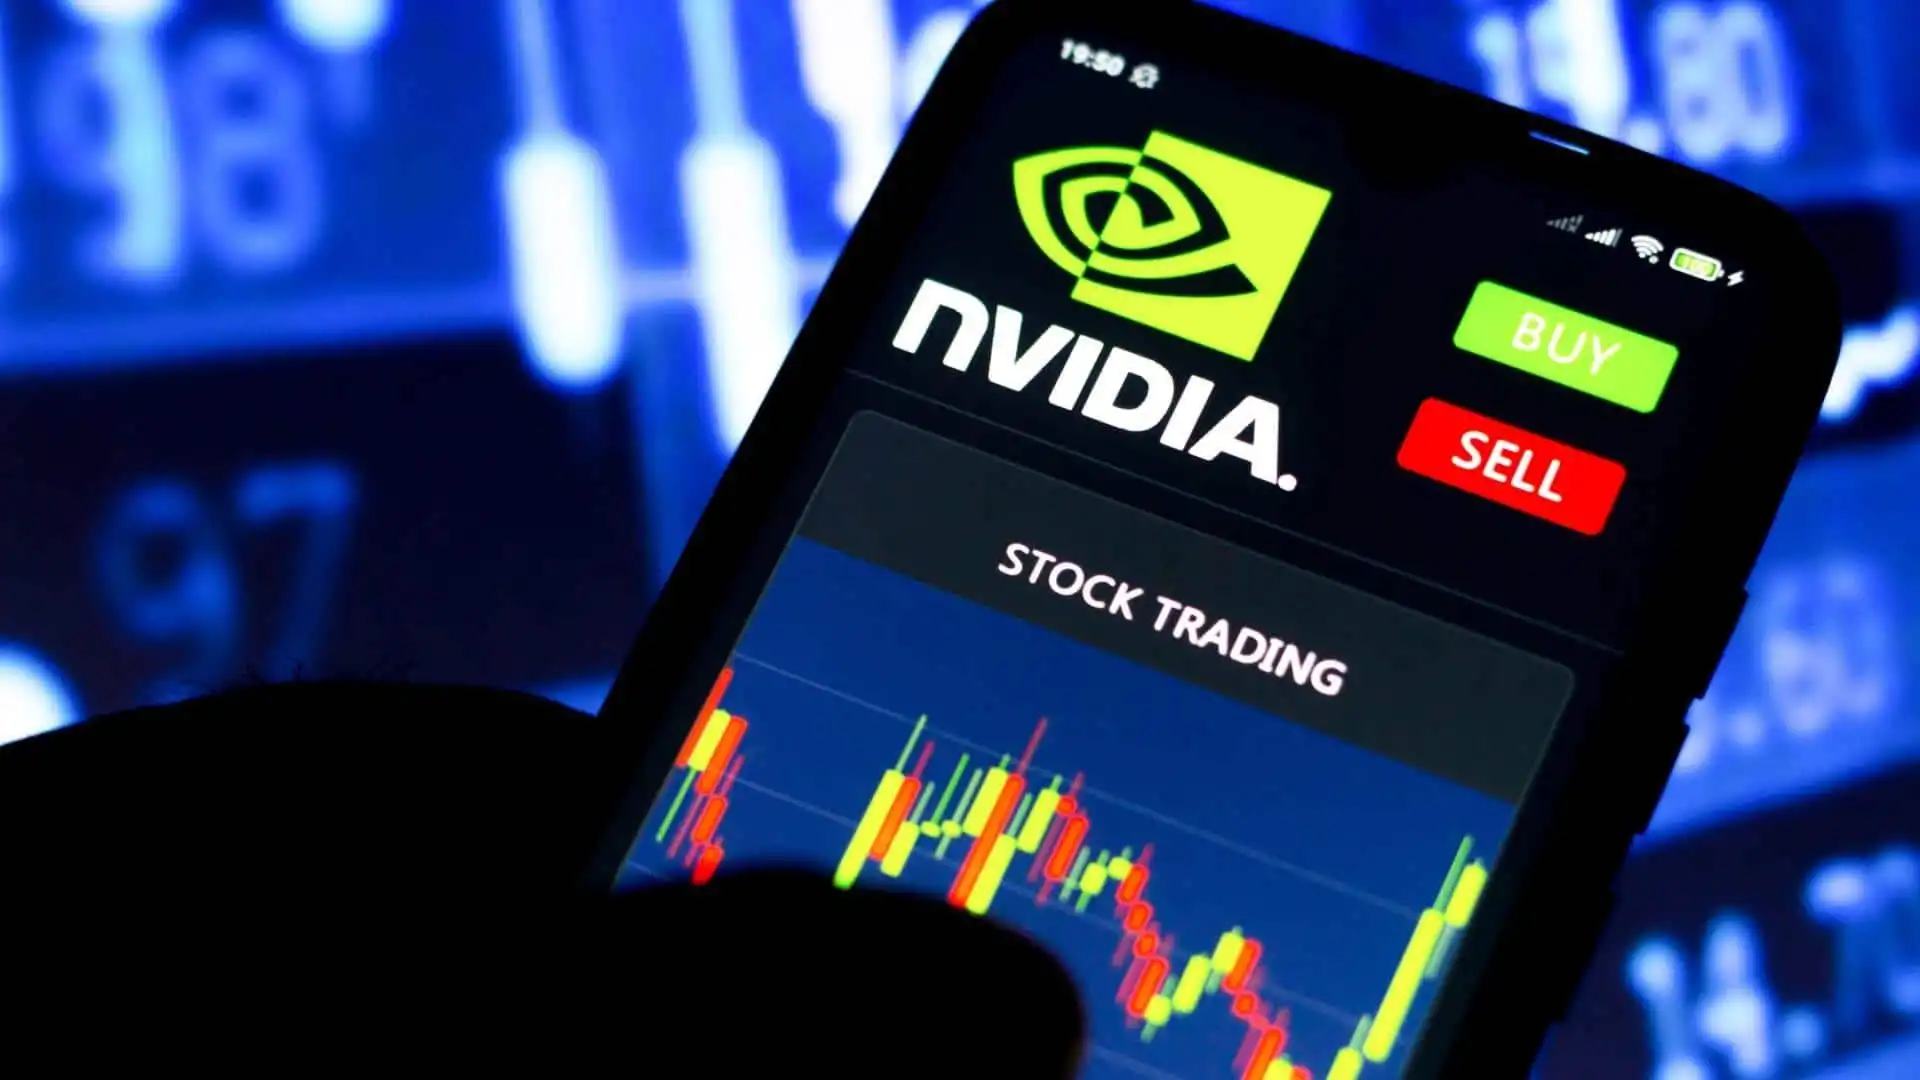 NVIDIA stock split spurs trend tech industry BofA